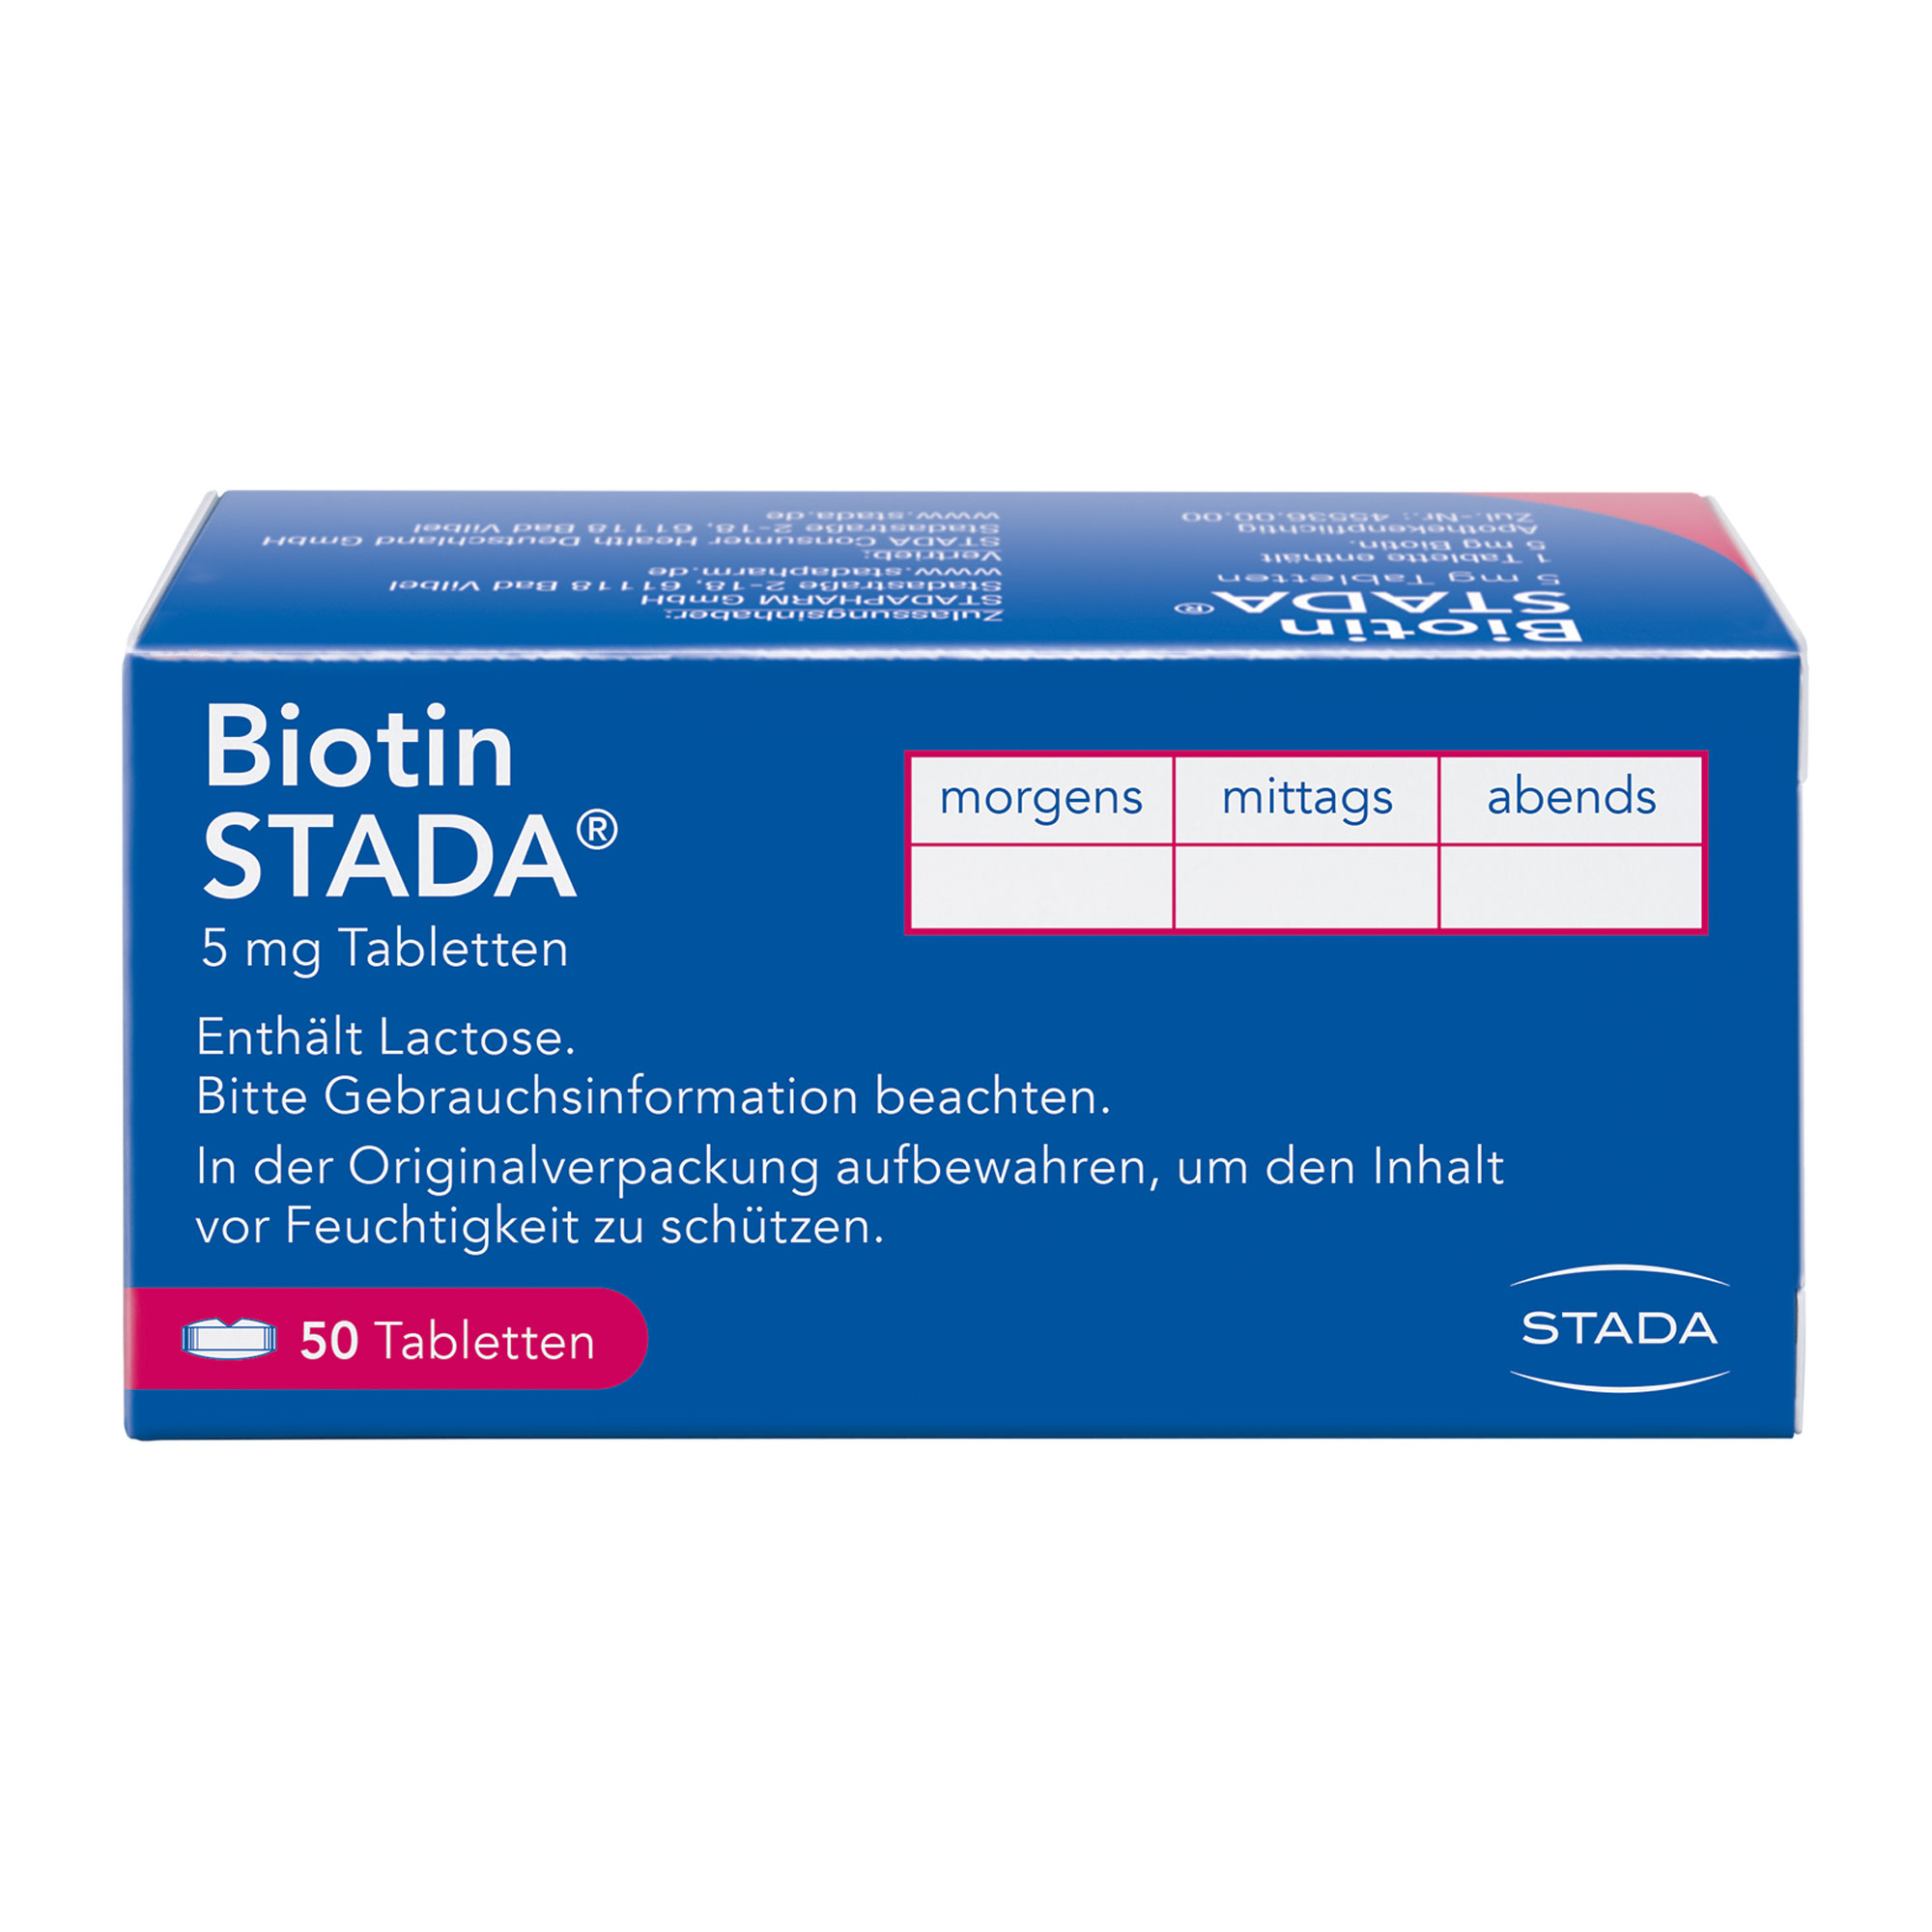 Biotin Stada 5 mg Tabletten Rückseite